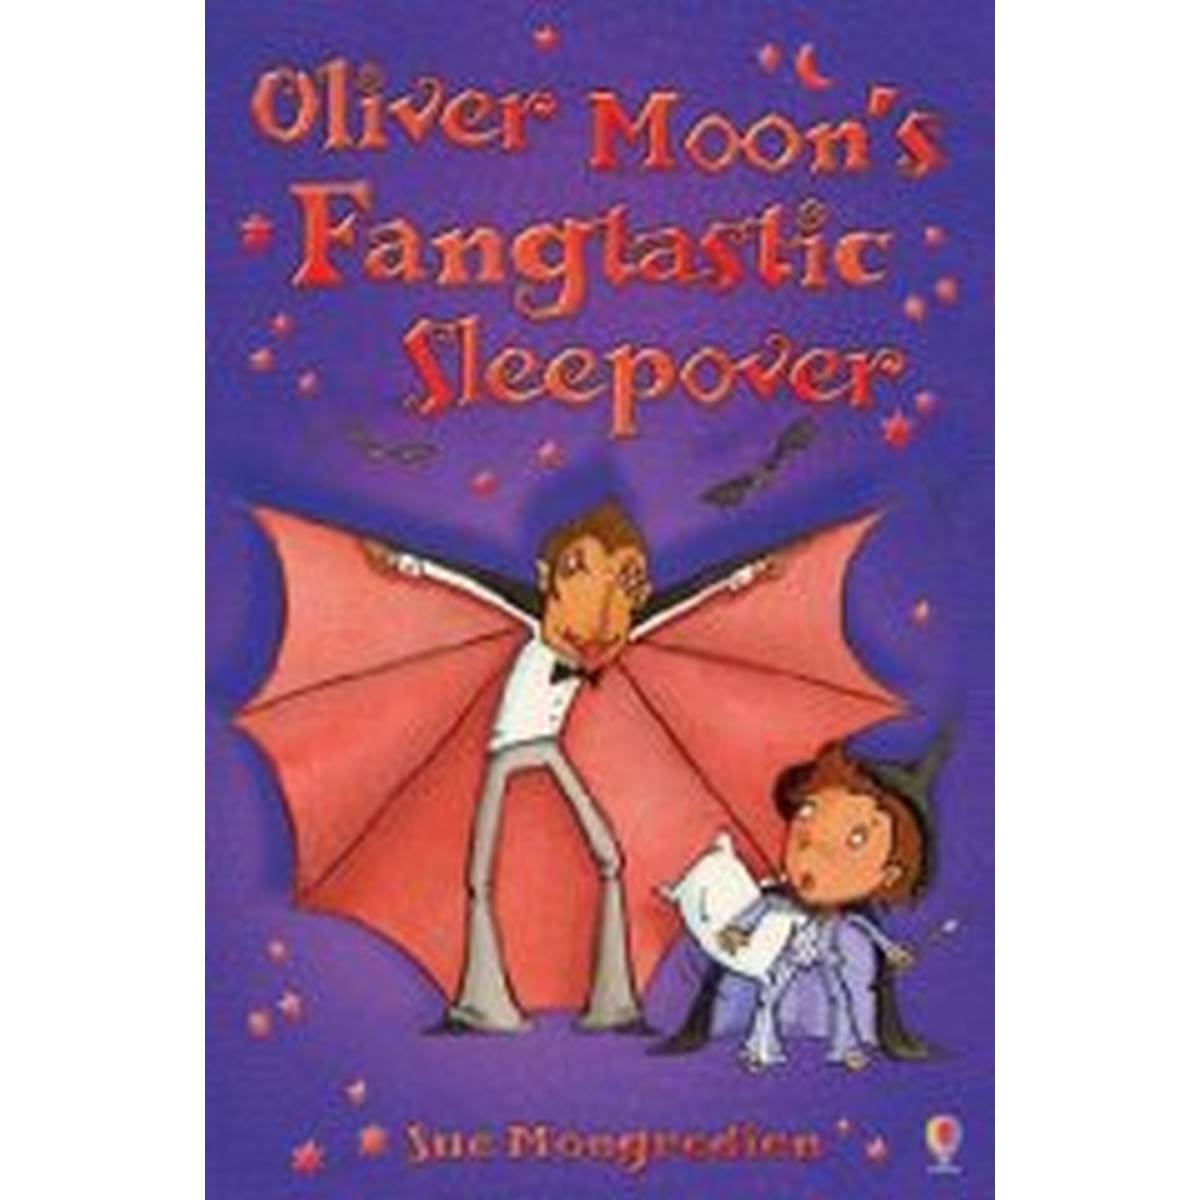 Oliver Moon's Fangtastic Sleepover